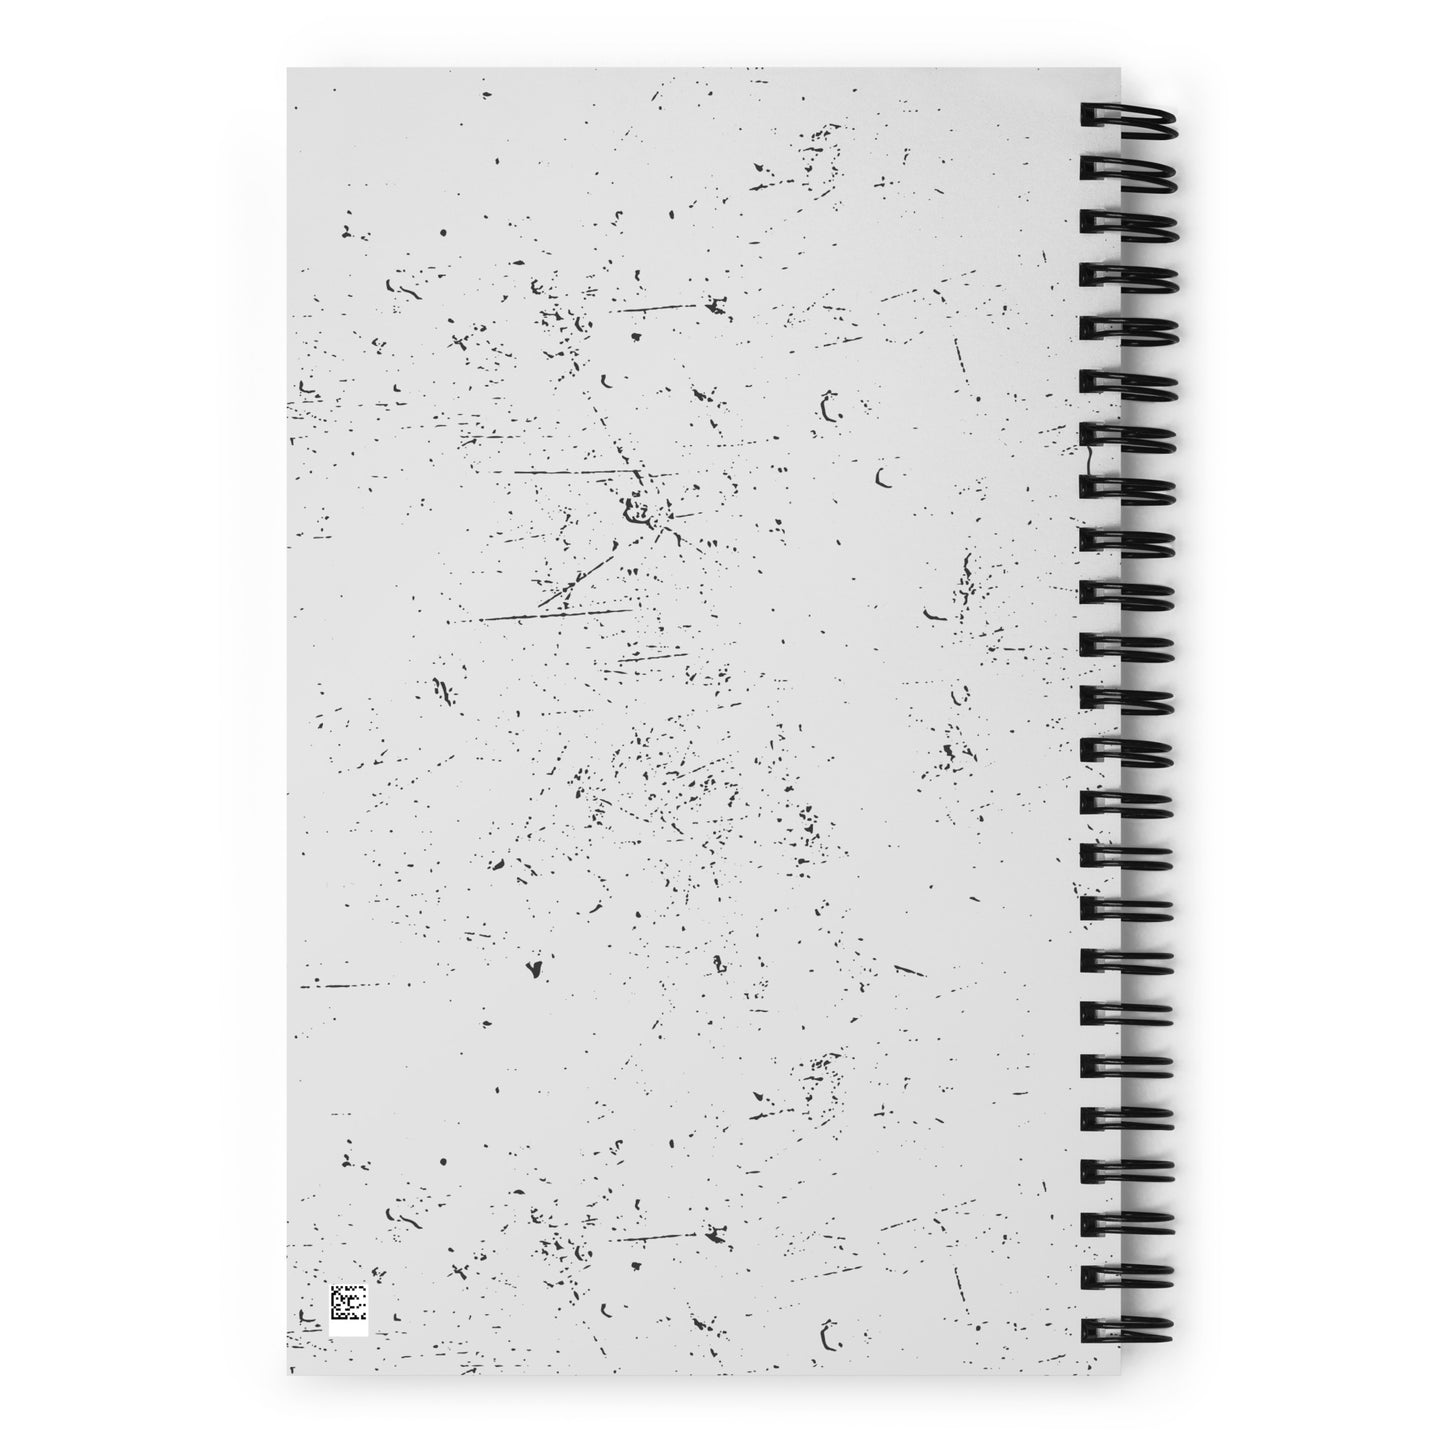 Jenesis Digital Notebook